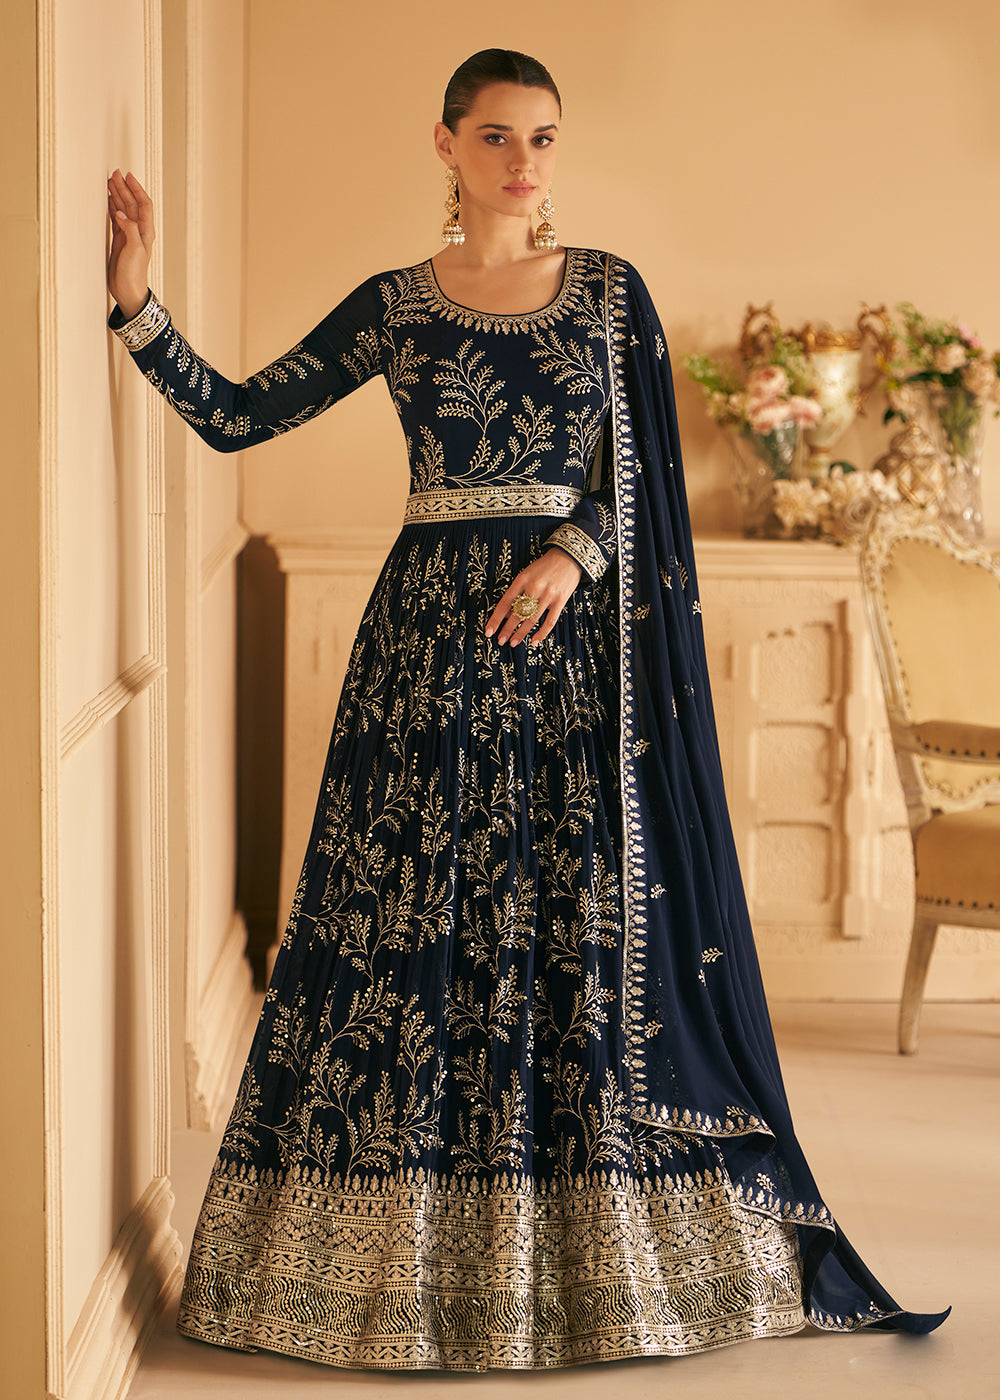 Buy Now Tempting Real Georgette Black Wedding Wear Anarkali Suit Online in USA, UK, Australia, New Zealand, Canada & Worldwide at Empress Clothing. 